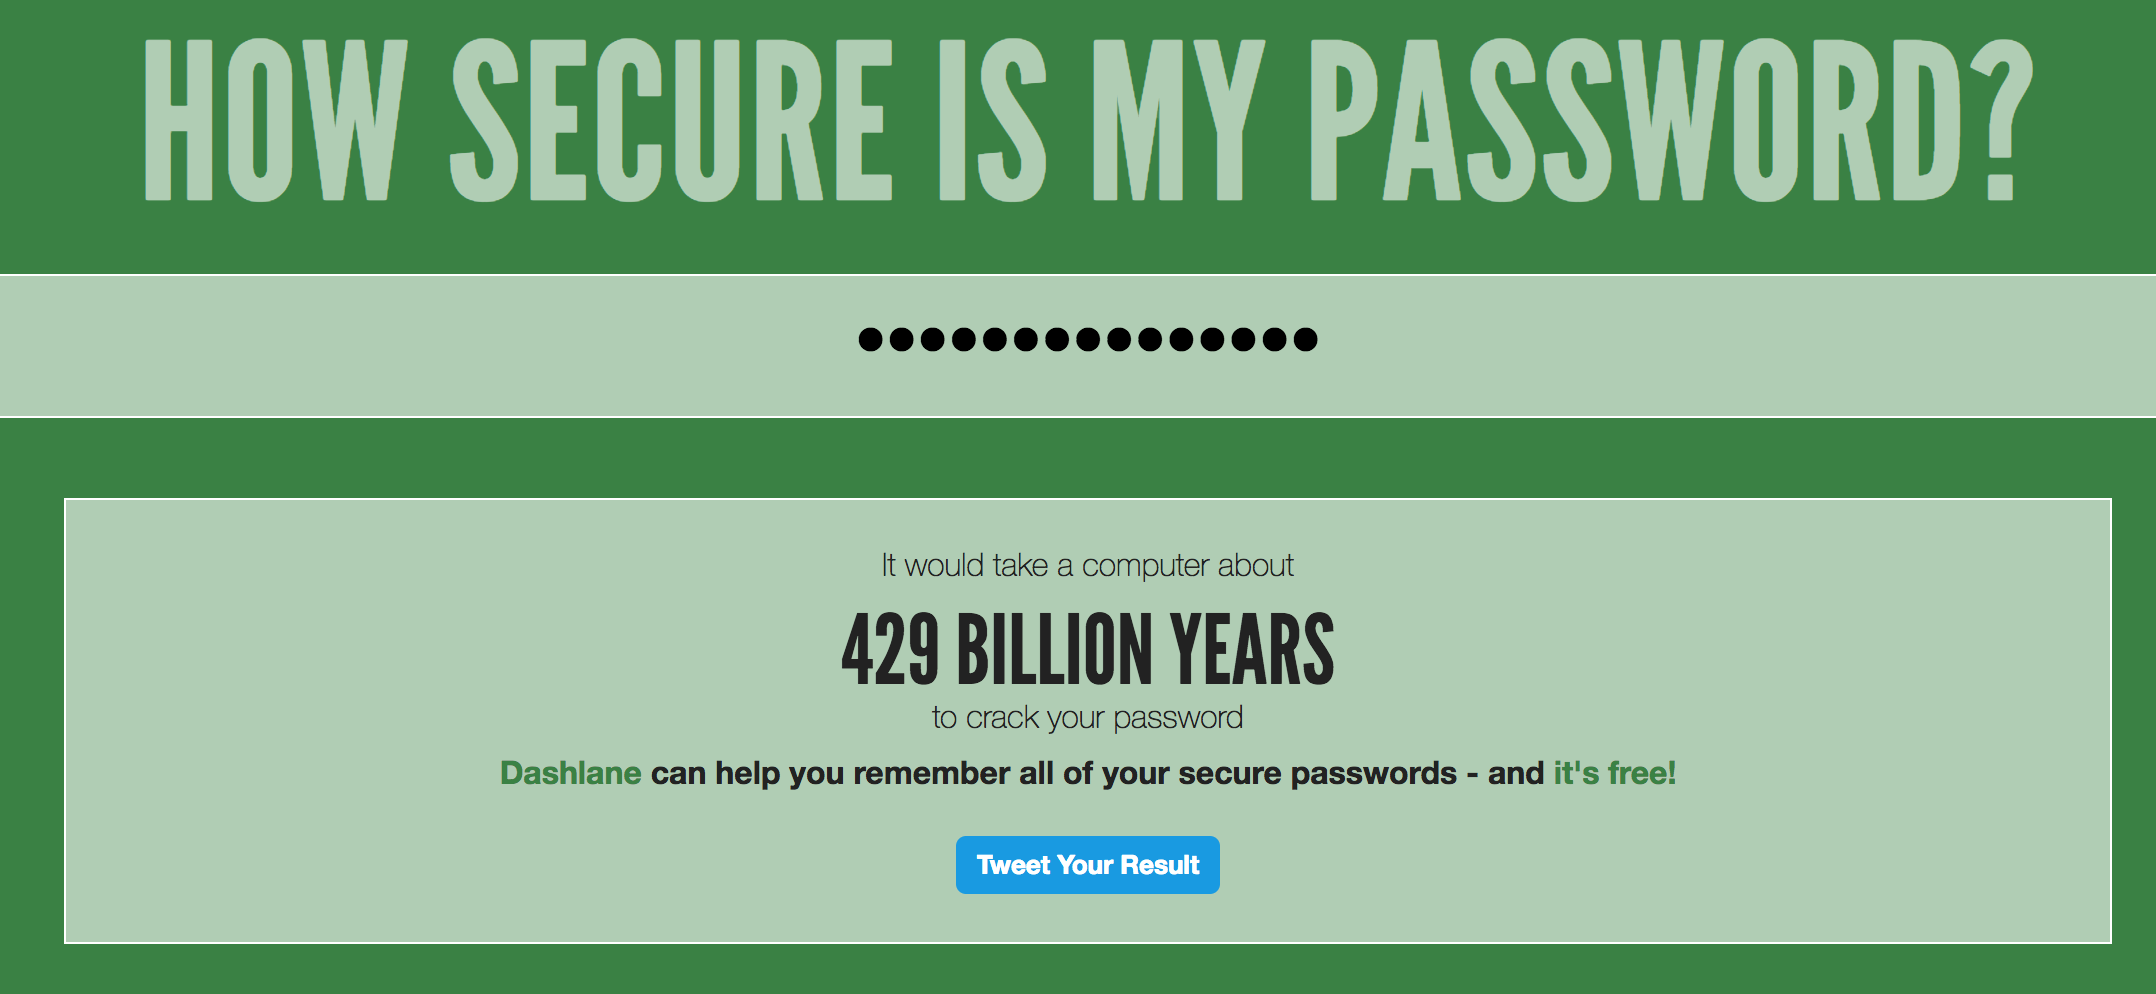 Secure password. Password Security. Password проверка пароля. How secure is your password. How secure is my password.